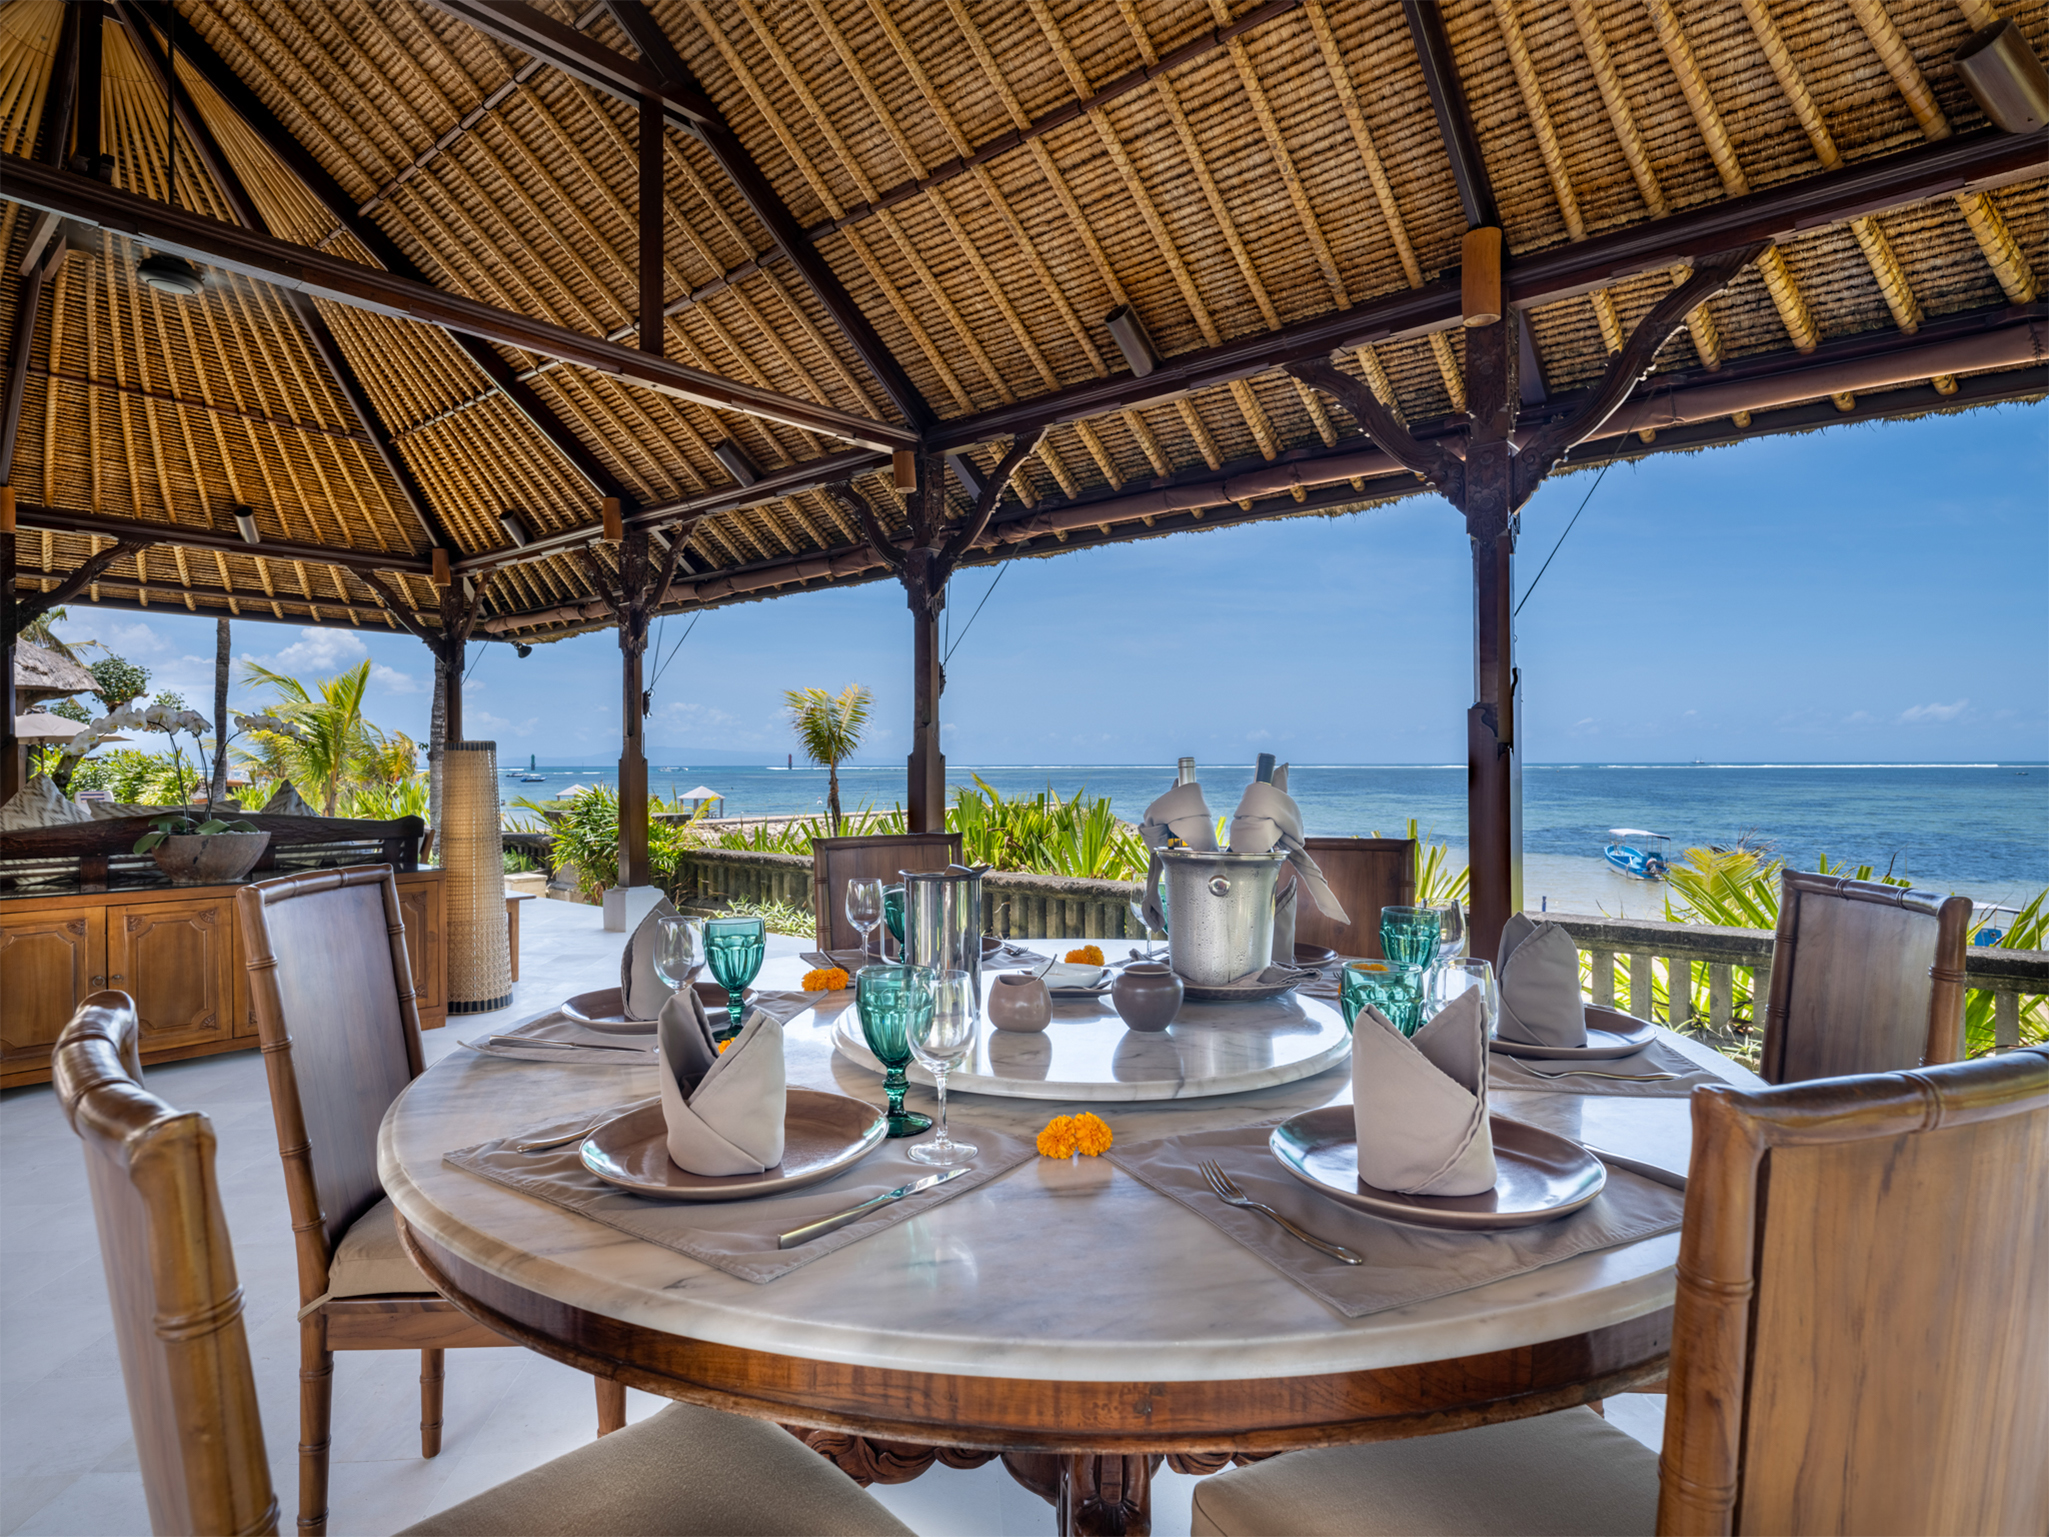 Villa Cemara - Outdoor dining and sea view - Villa Cemara, Sanur, Bali